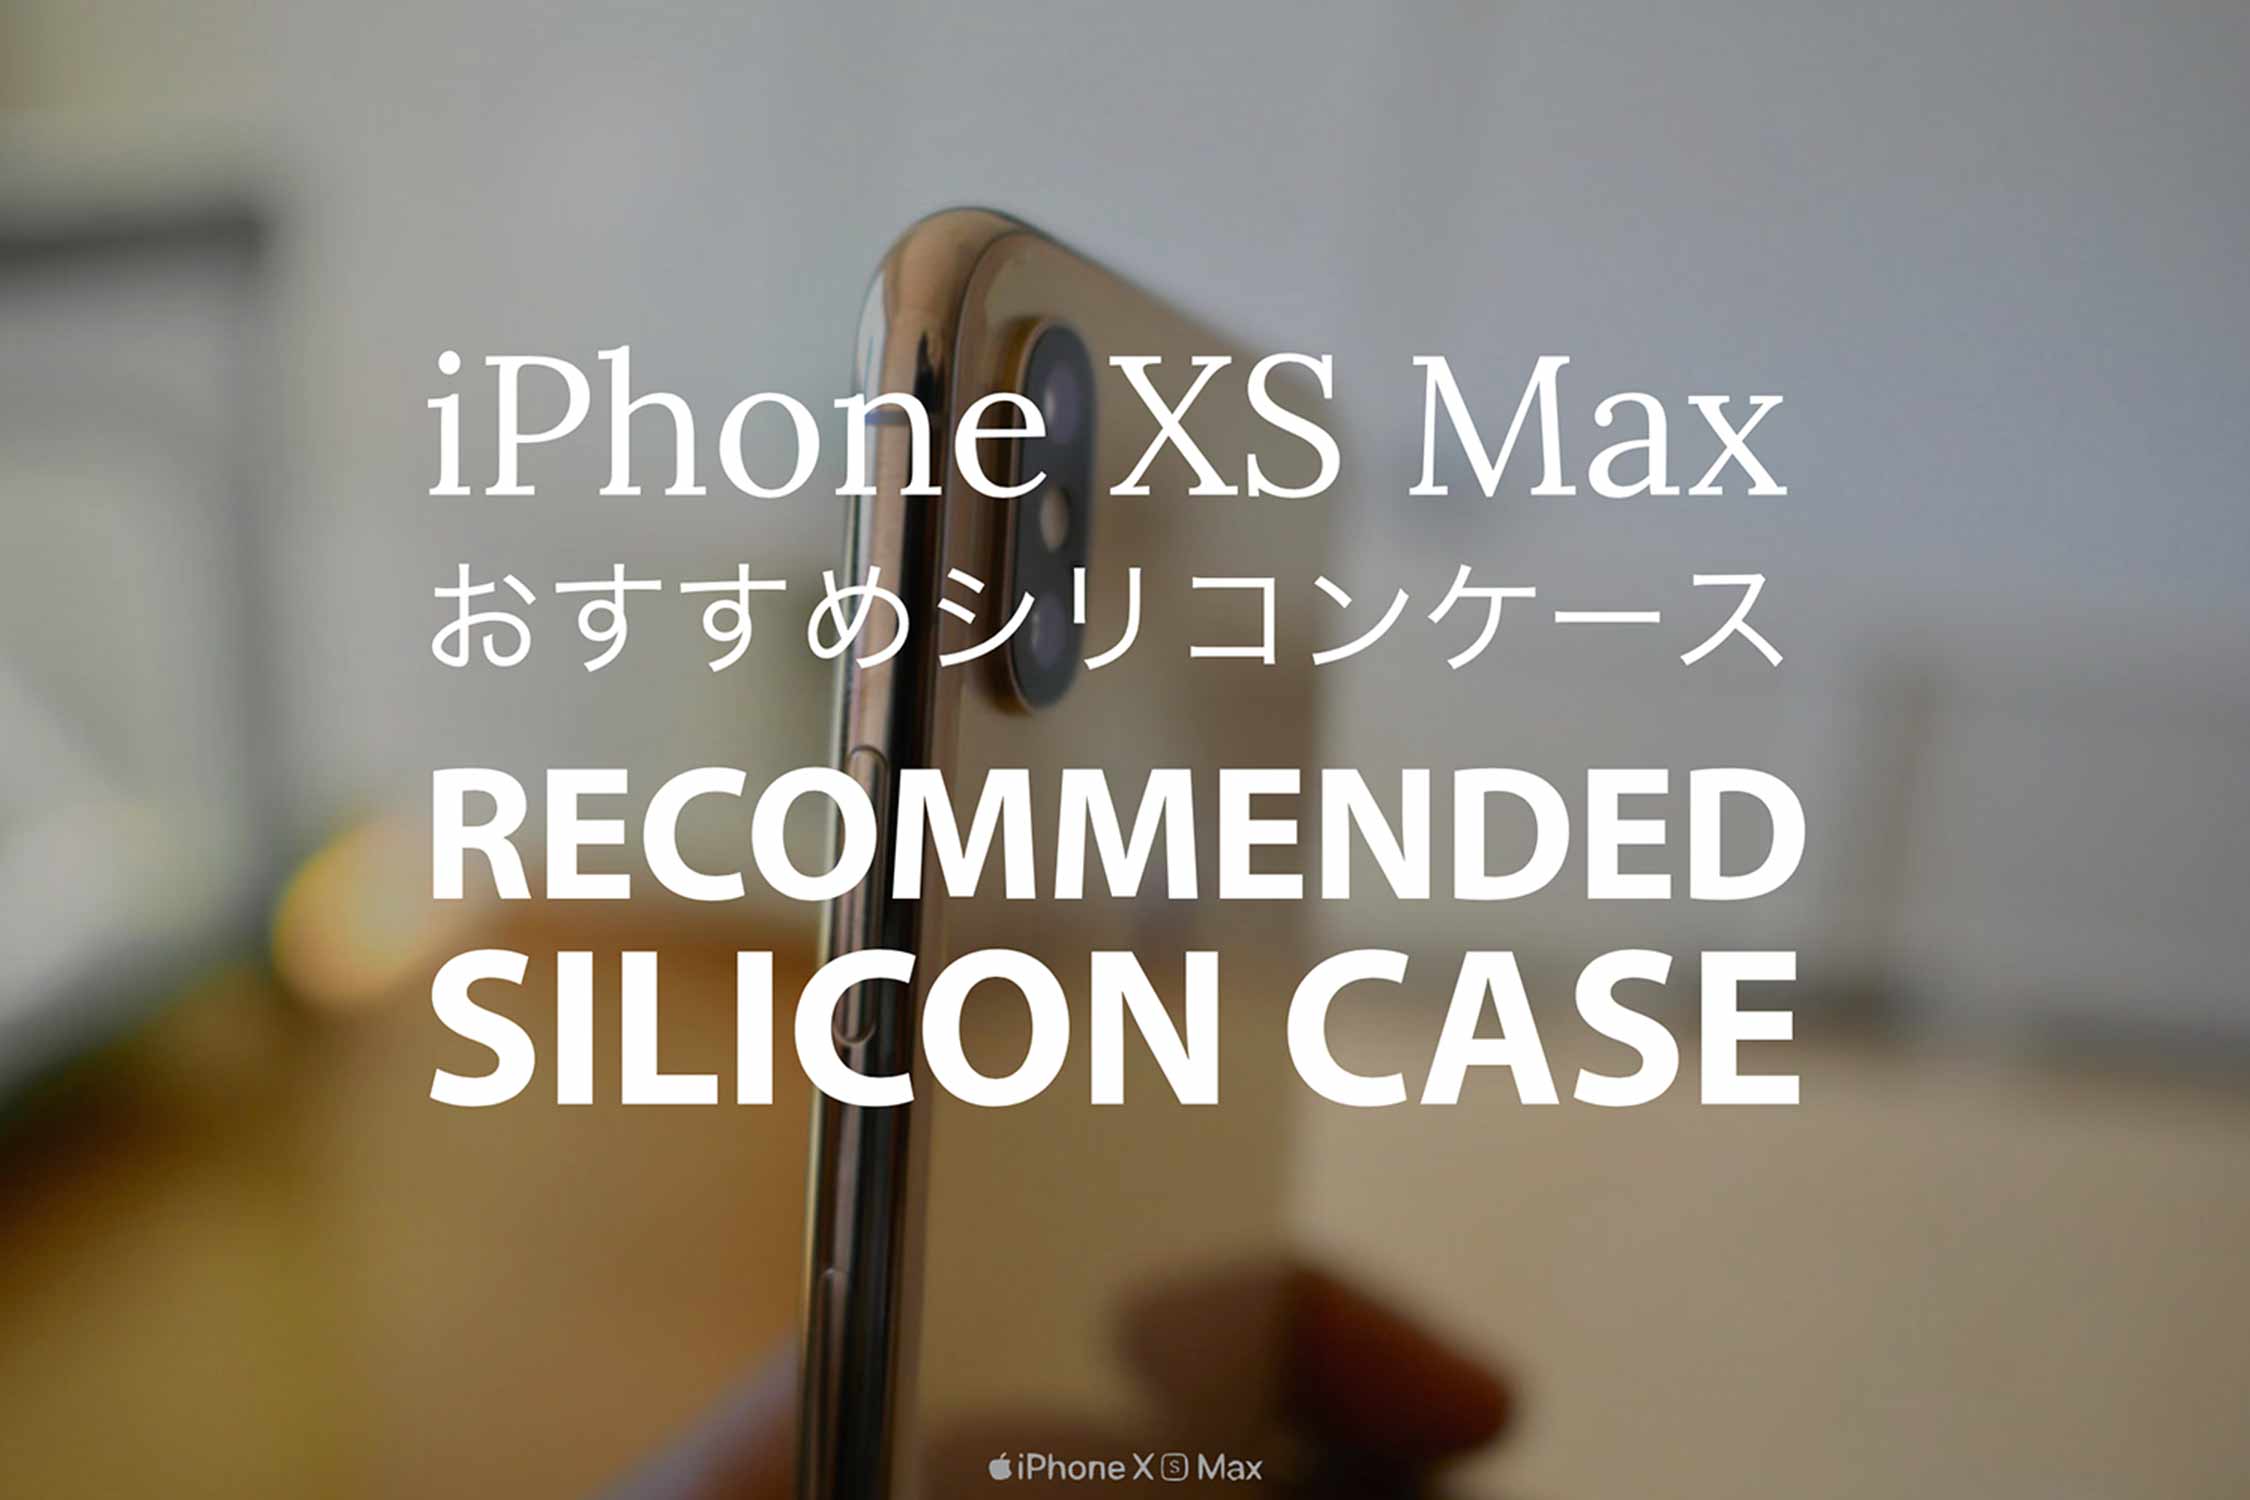 iPhone XS Max シリコンケース 記事